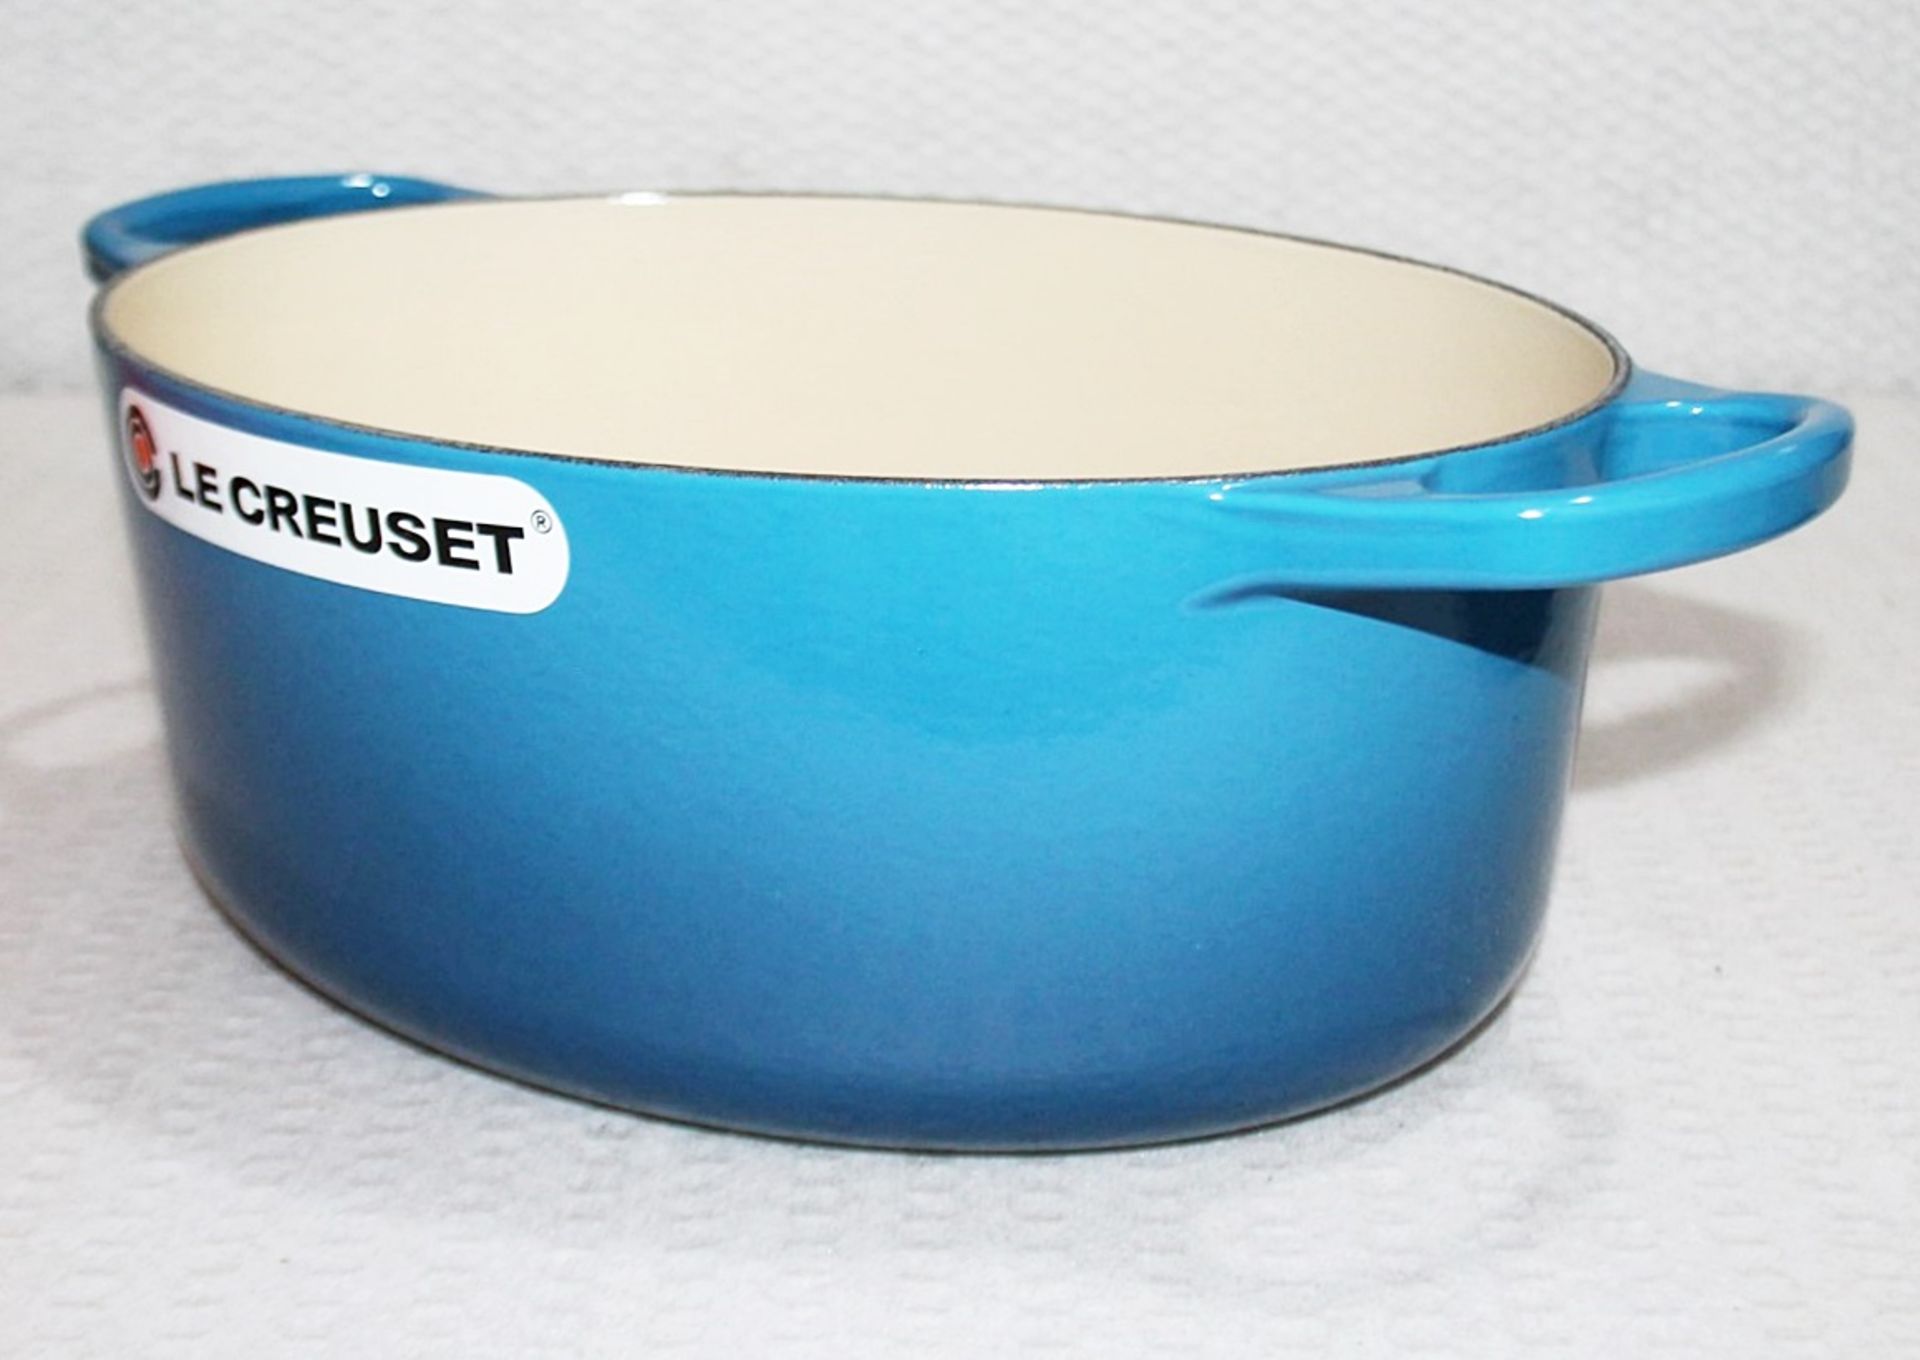 1 x LE CREUSET 'Signature' Enamelled Cast Iron 29cm Oval Casserole Dish In Blue - RRP £295.00 - Image 6 of 9